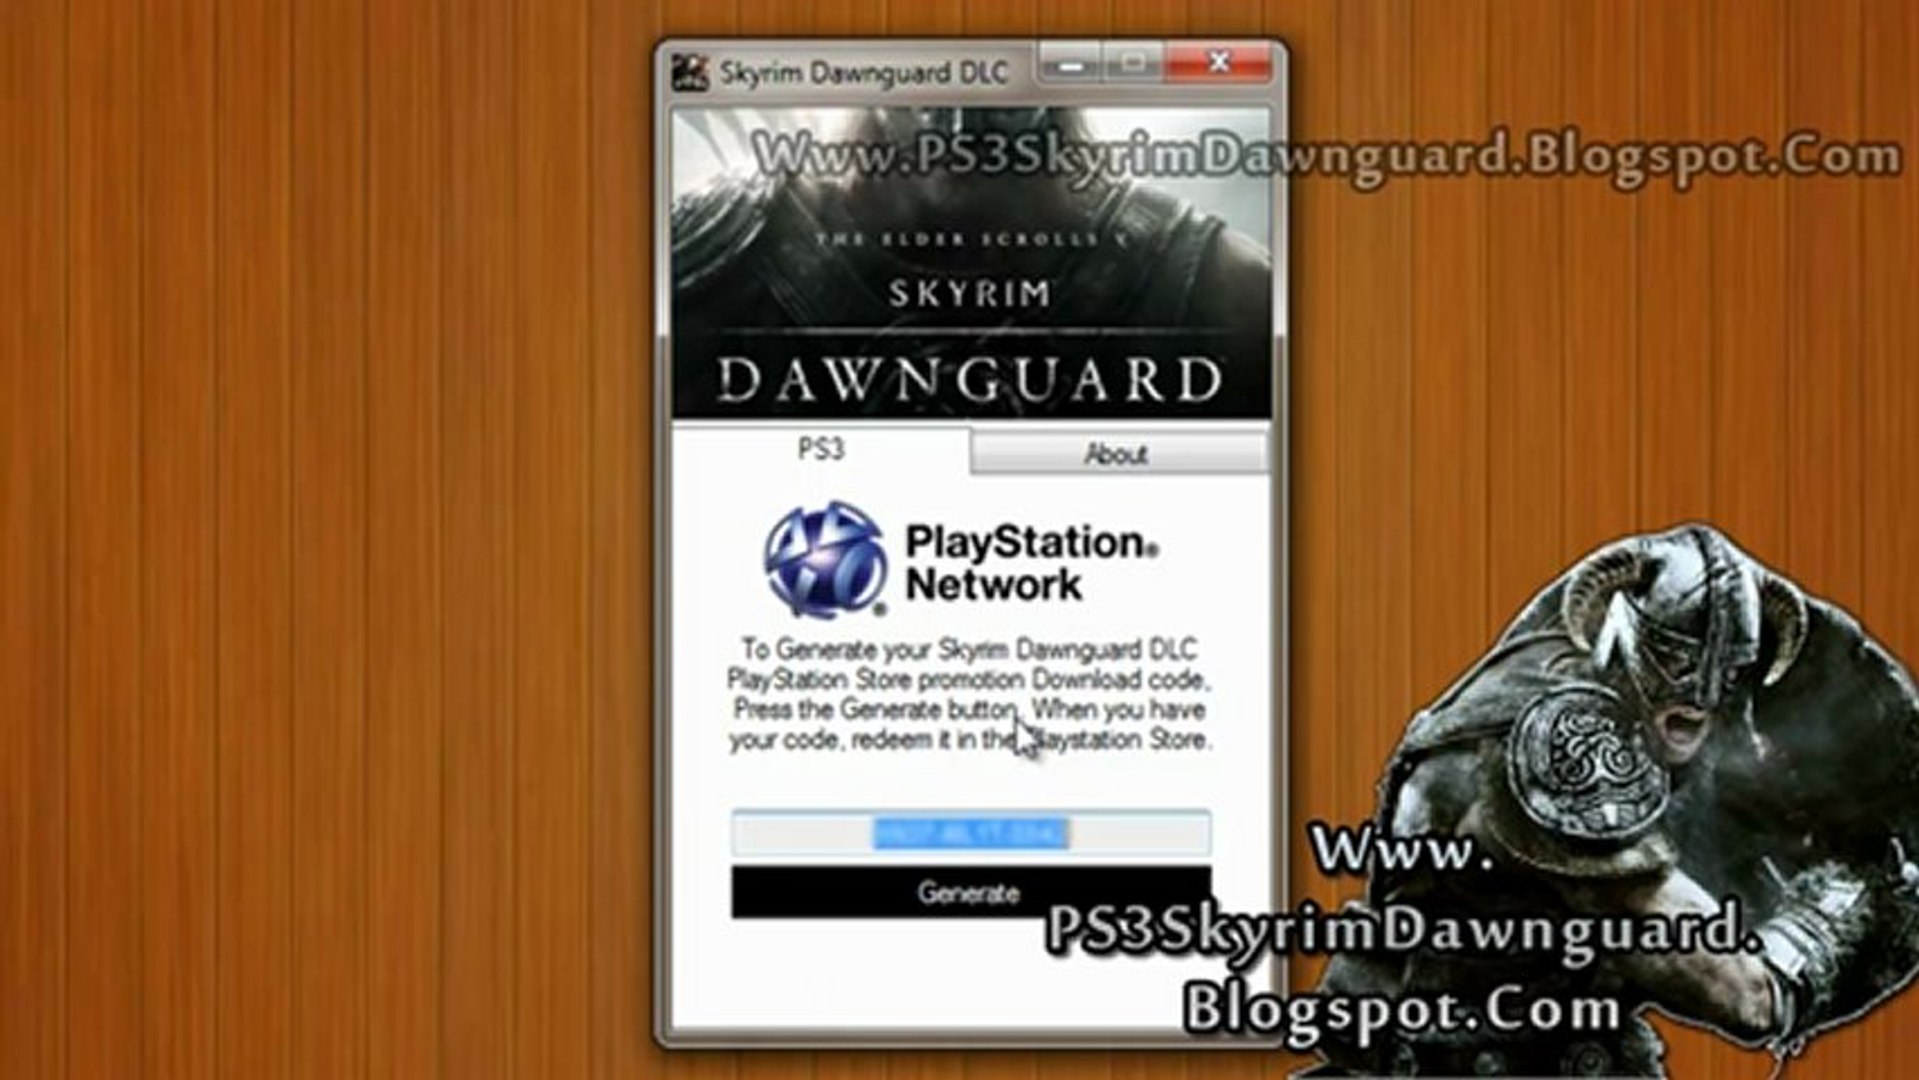 Skyrim Dawnguard DLC Codes - Free - PS3 - video Dailymotion